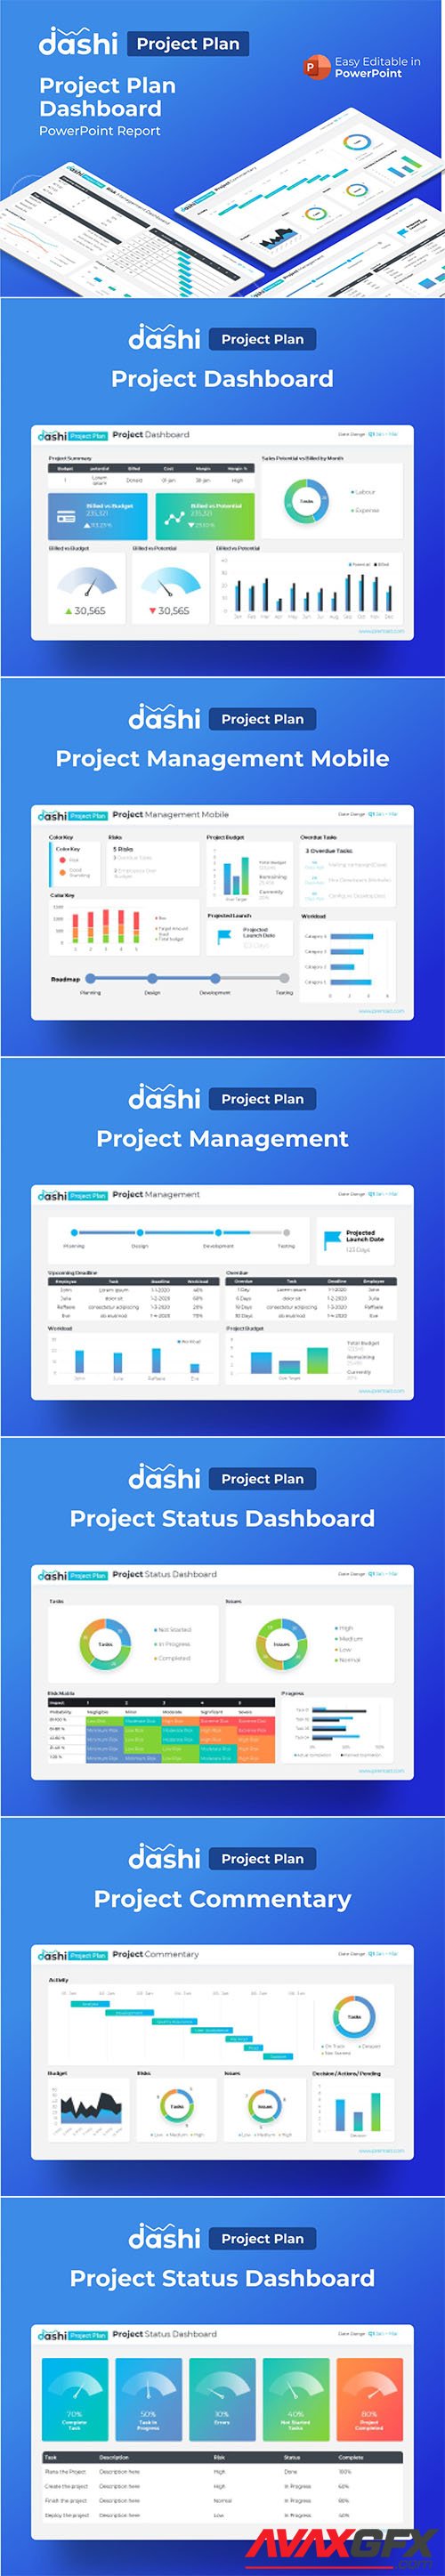 Dashi Project Plan Dashboard PowerPoint